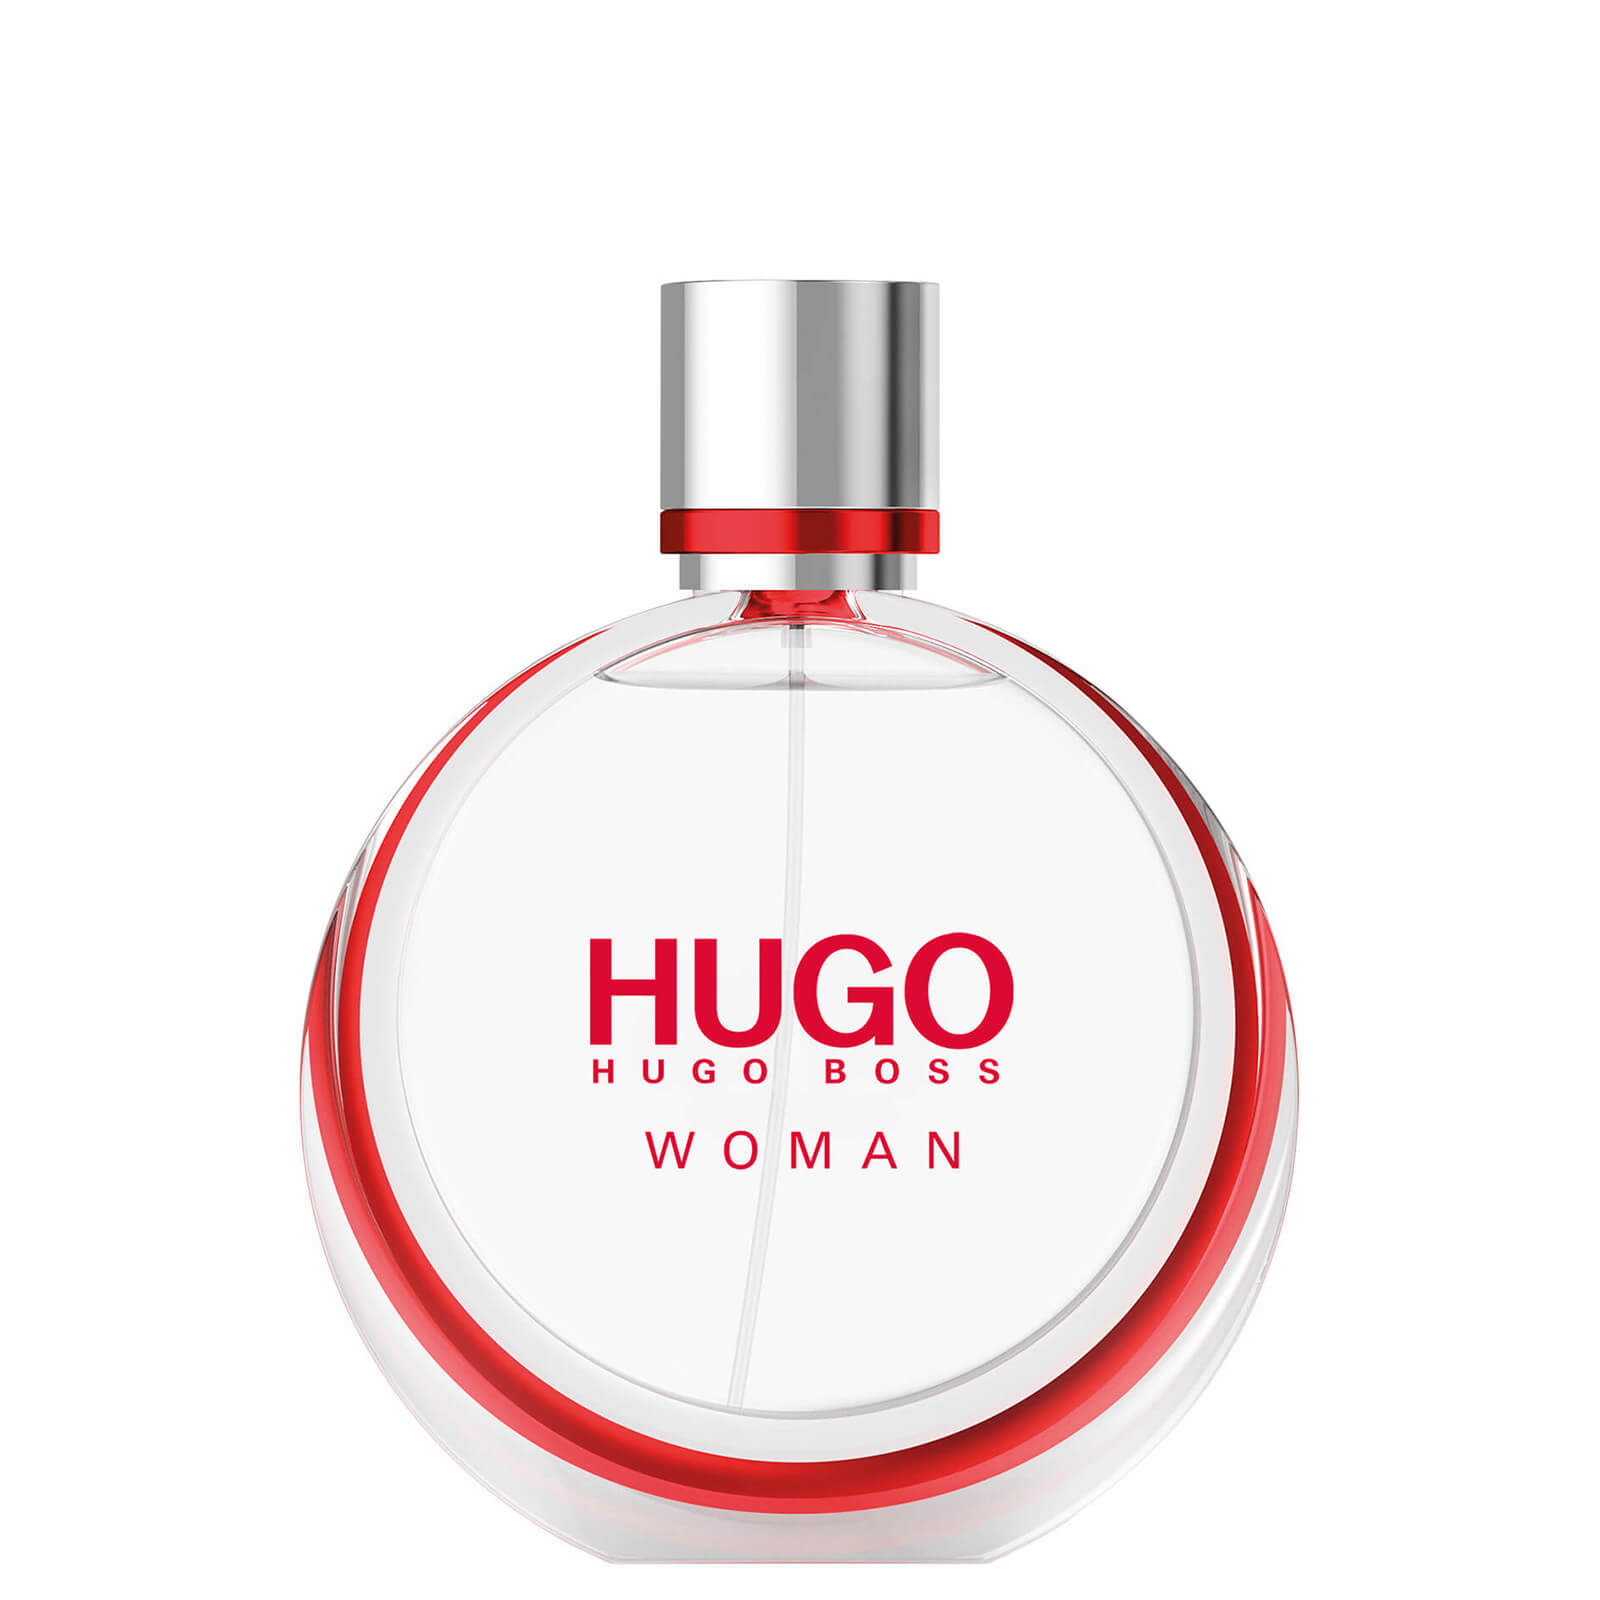 Image of Hugo Boss HUGO Woman Eau de Parfum Profumo Spray 50ml